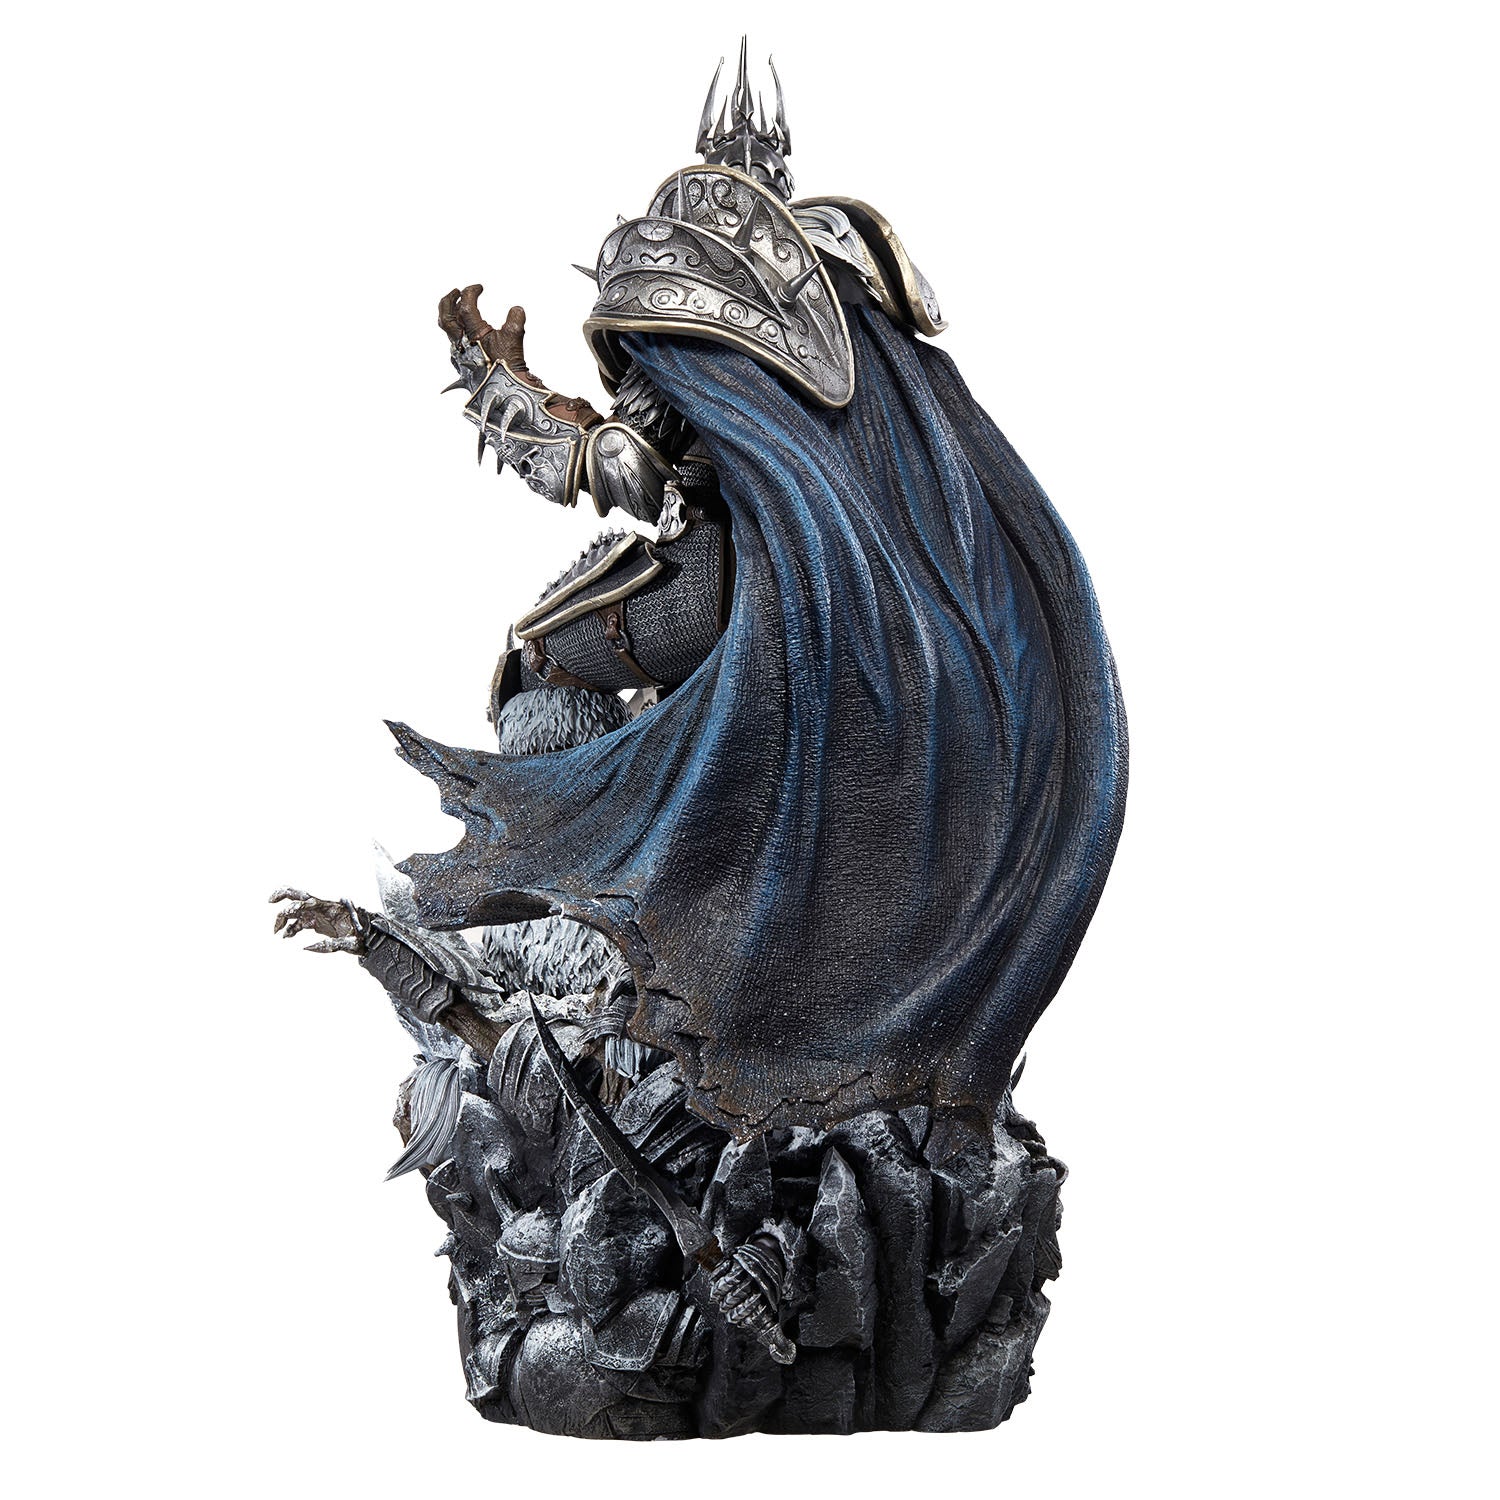 World of Warcraft Lich King Arthas Menethil 66cm Premium Statue  - Back View